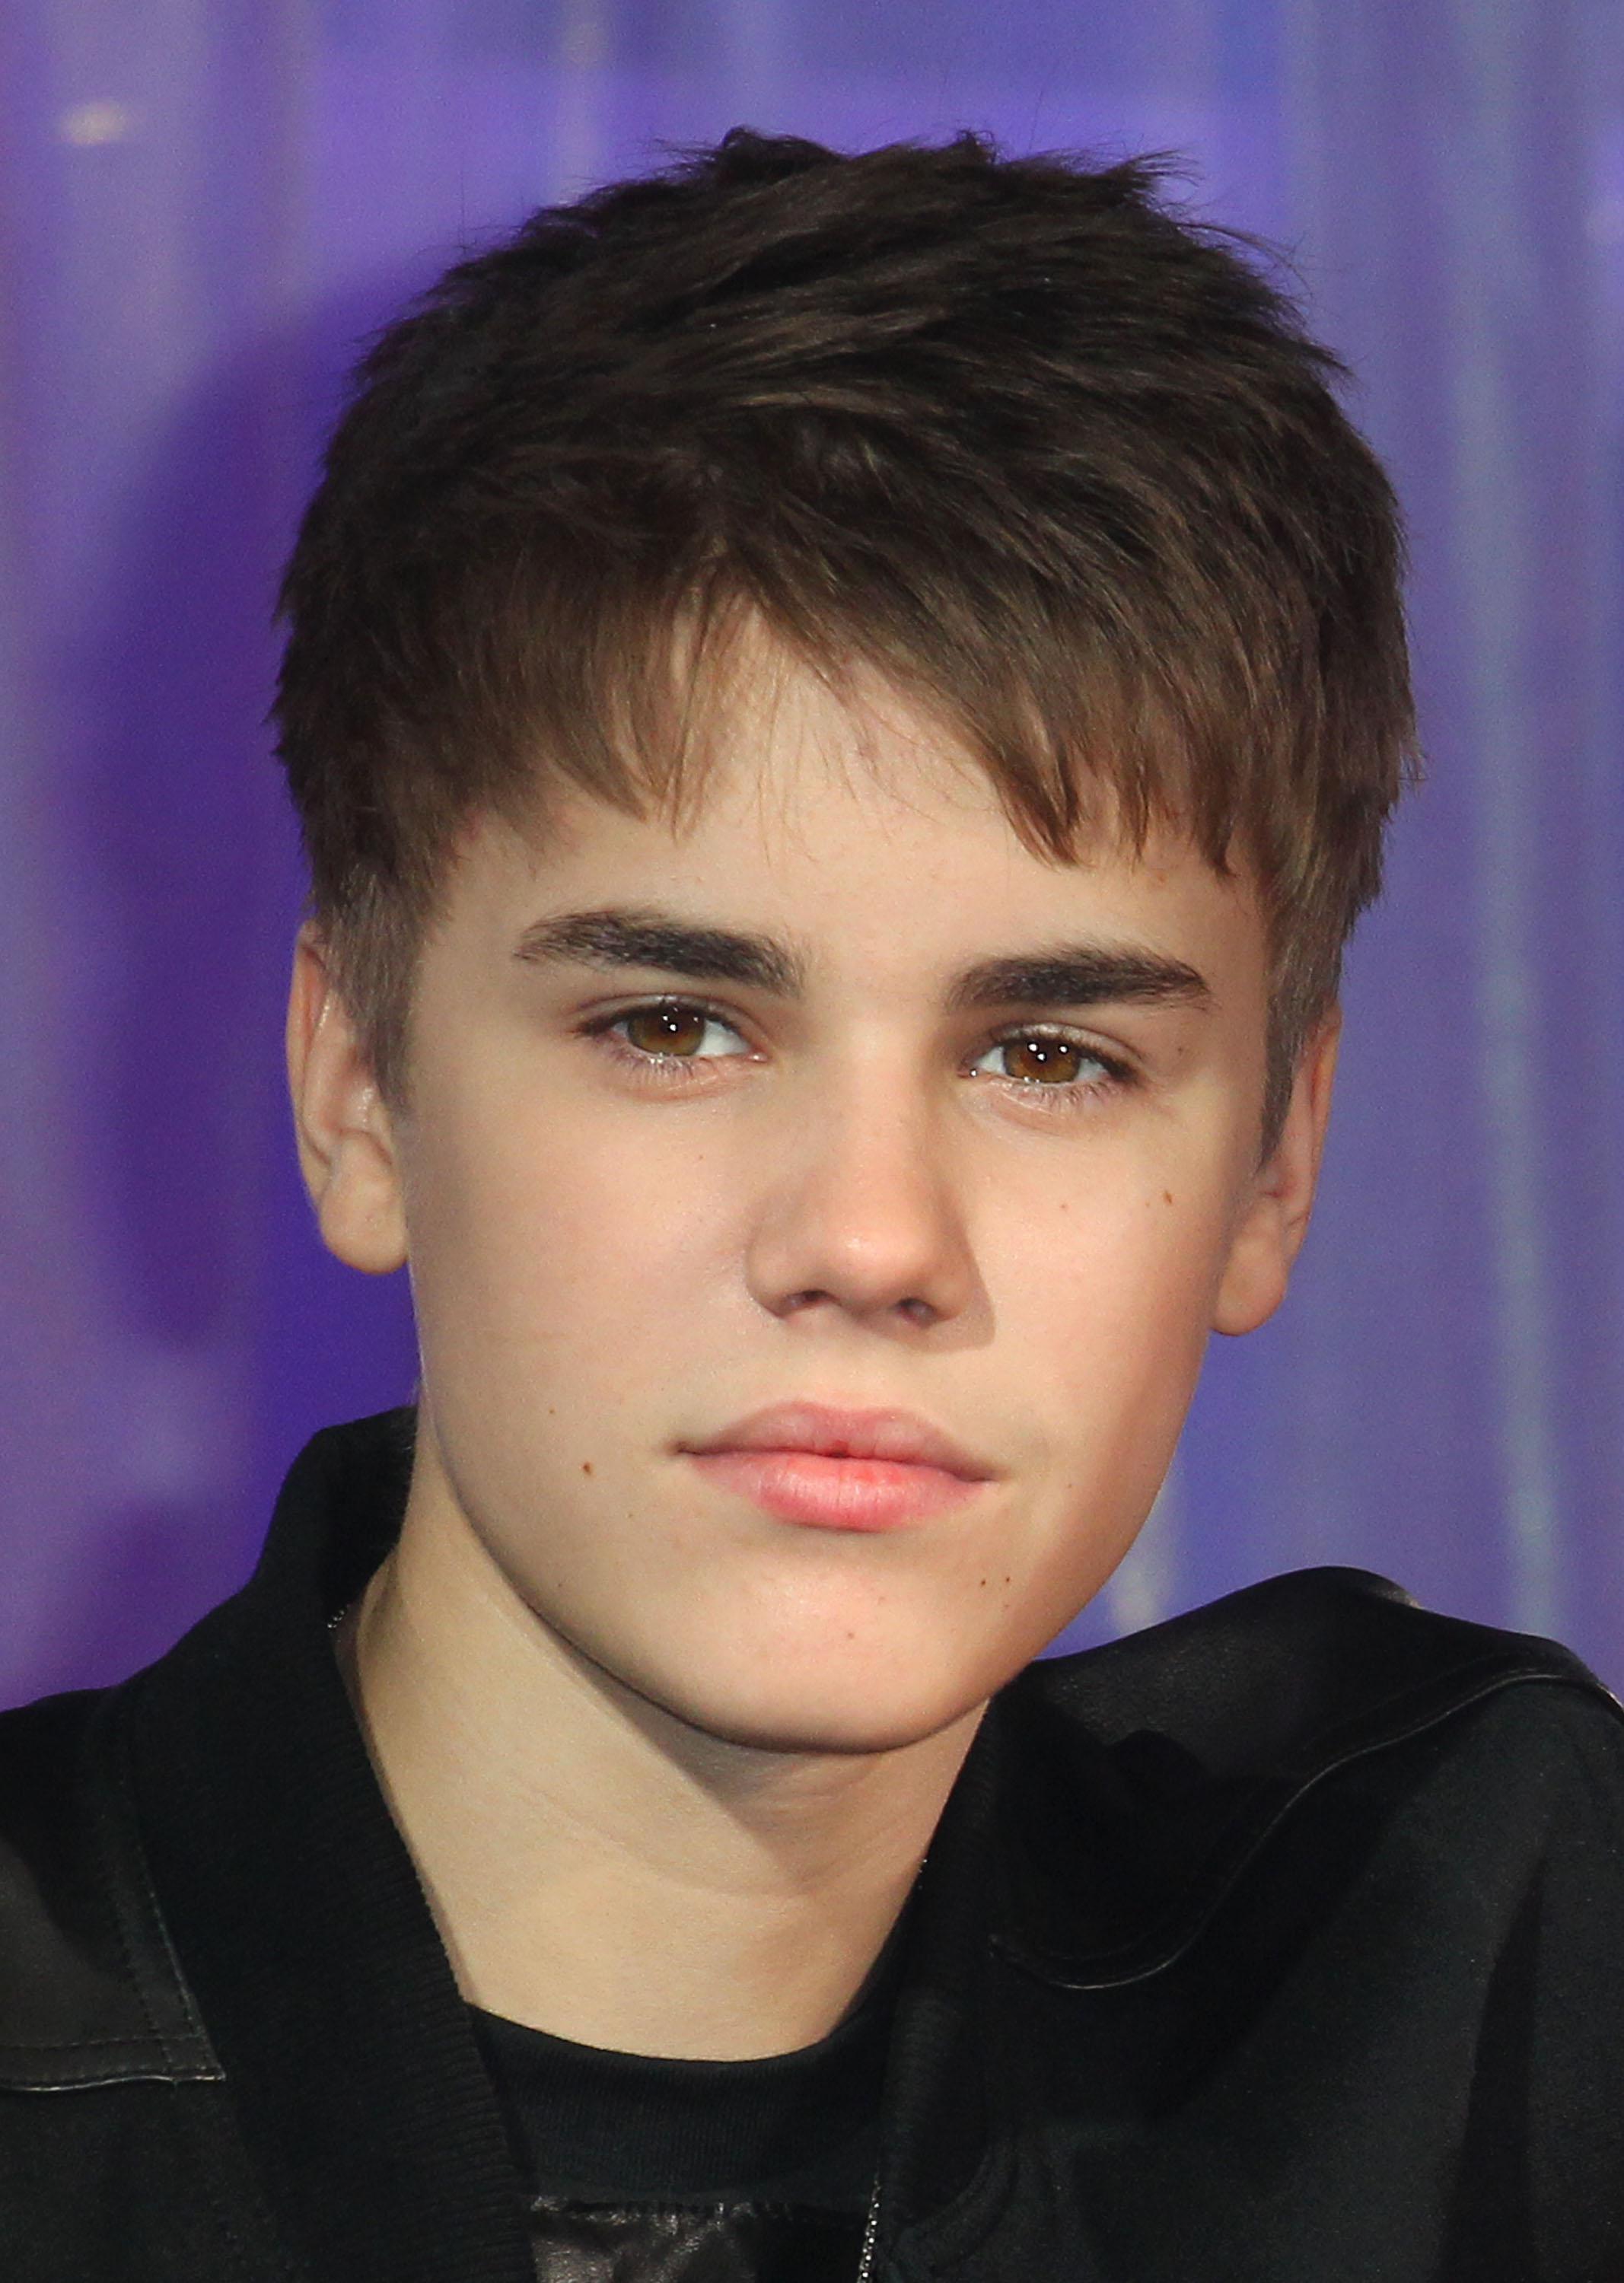 How to get Justin Biebers hair  Imitate Justin Biebers haircut